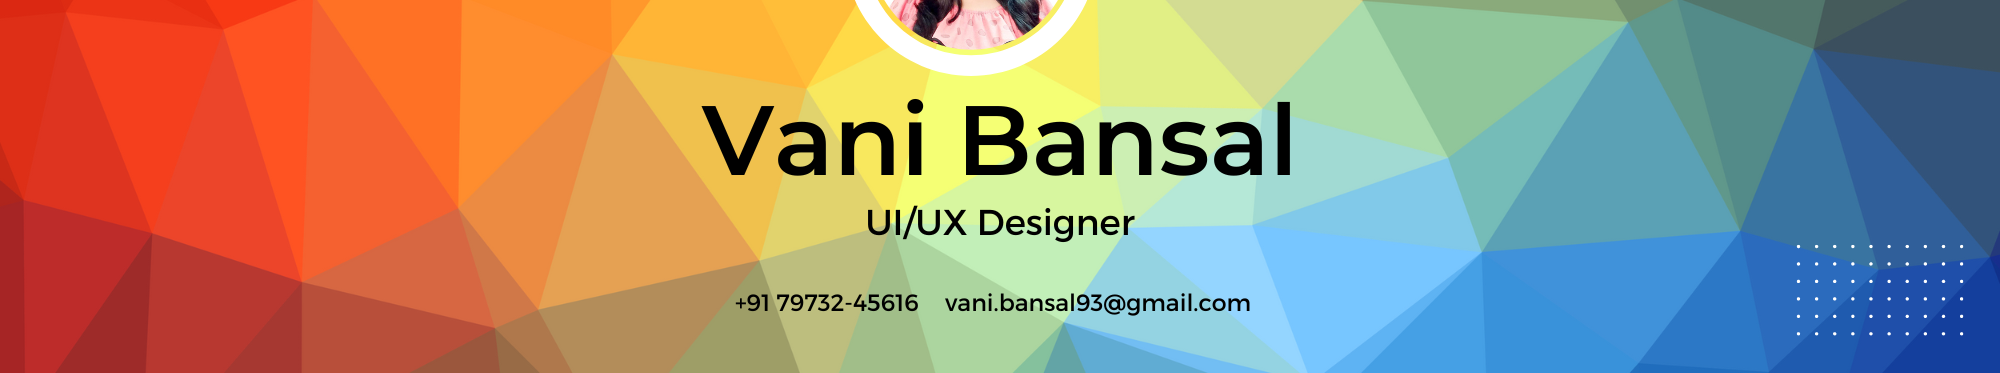 Vani Bansal's profile banner